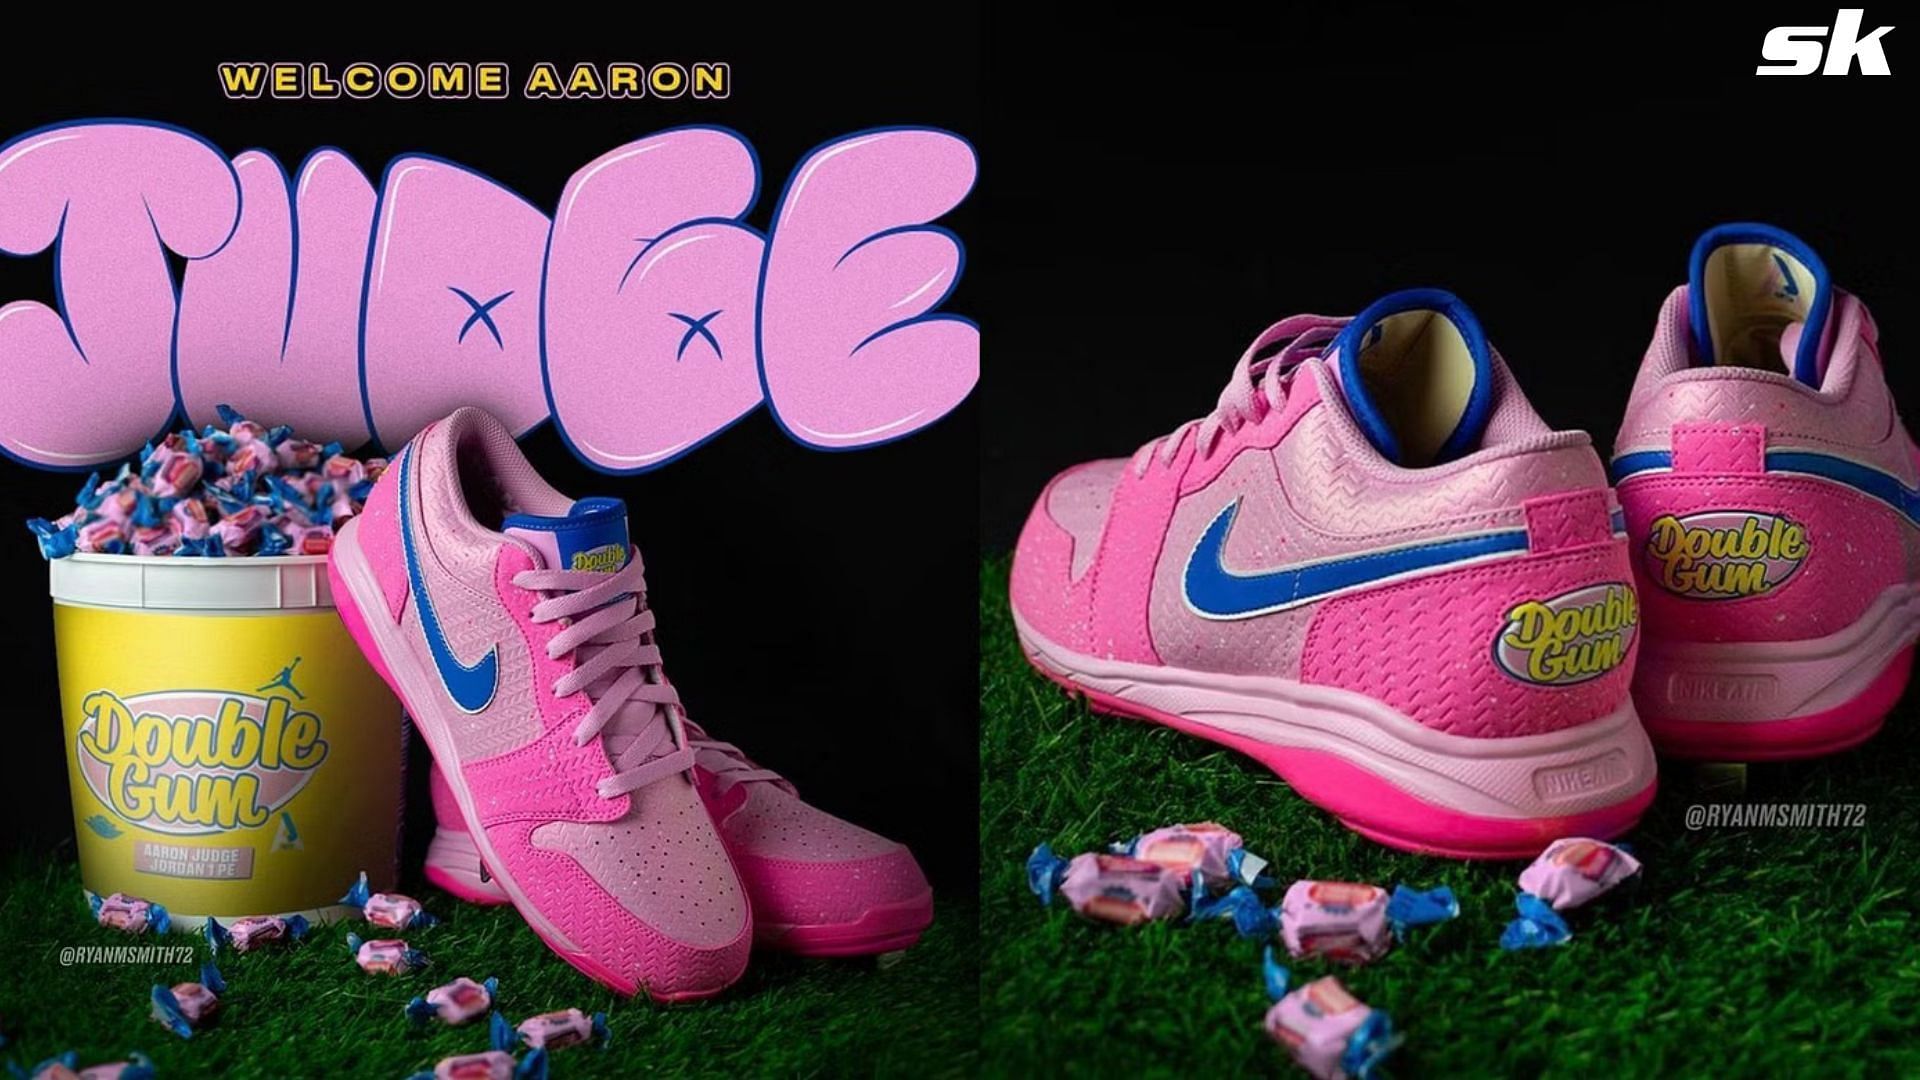 Aaron Judge&#039;s Nike shoes